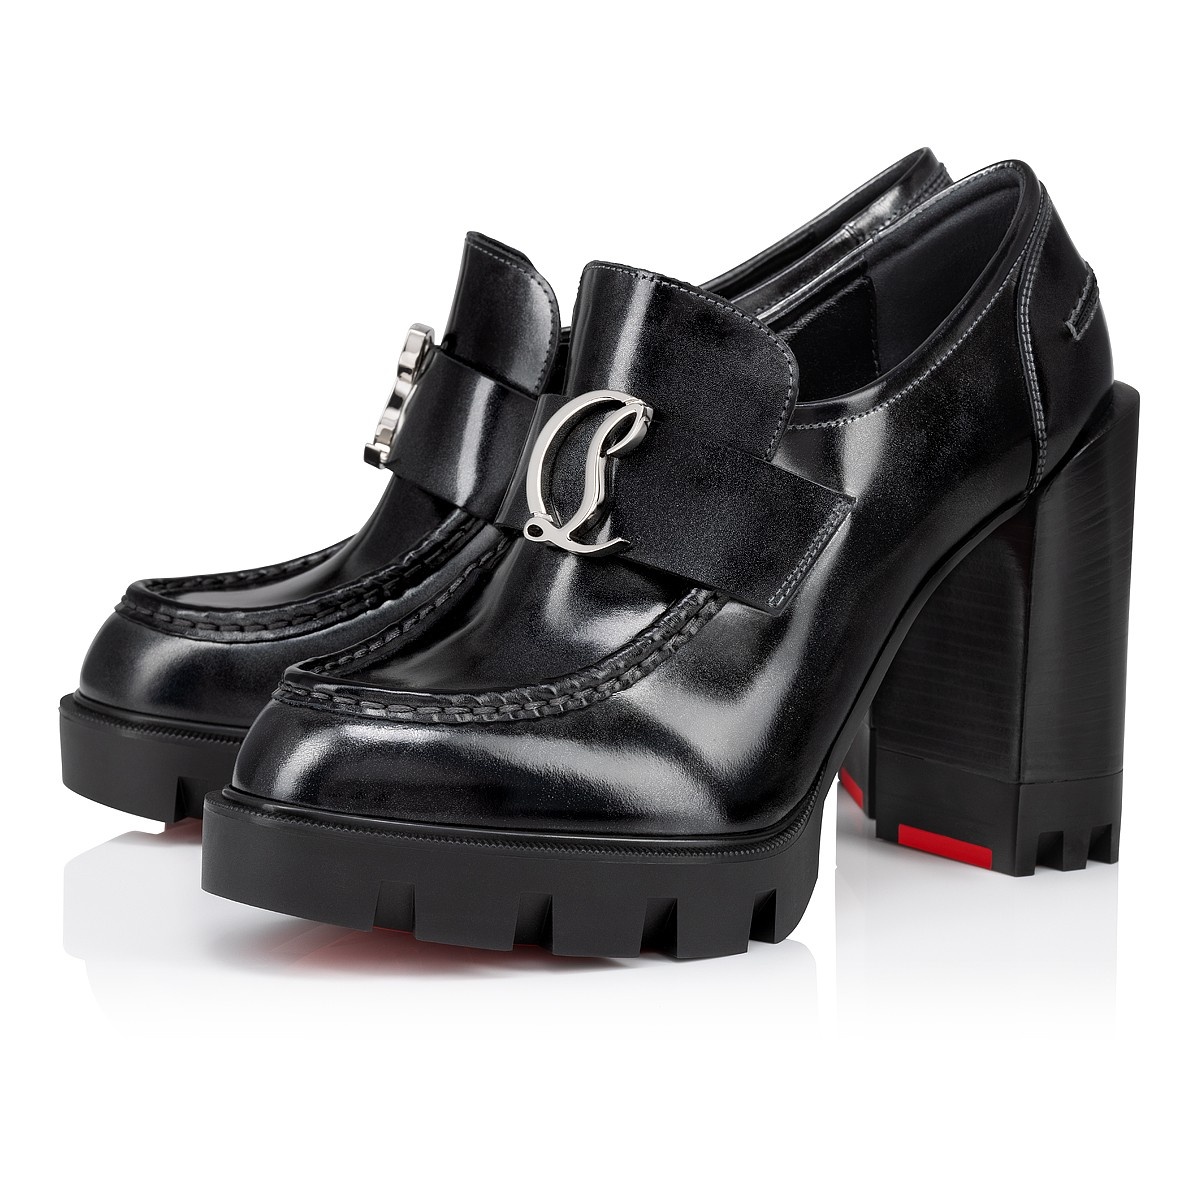 CL Moc Lug - Loafers - Calf leather - Black - Christian Louboutin